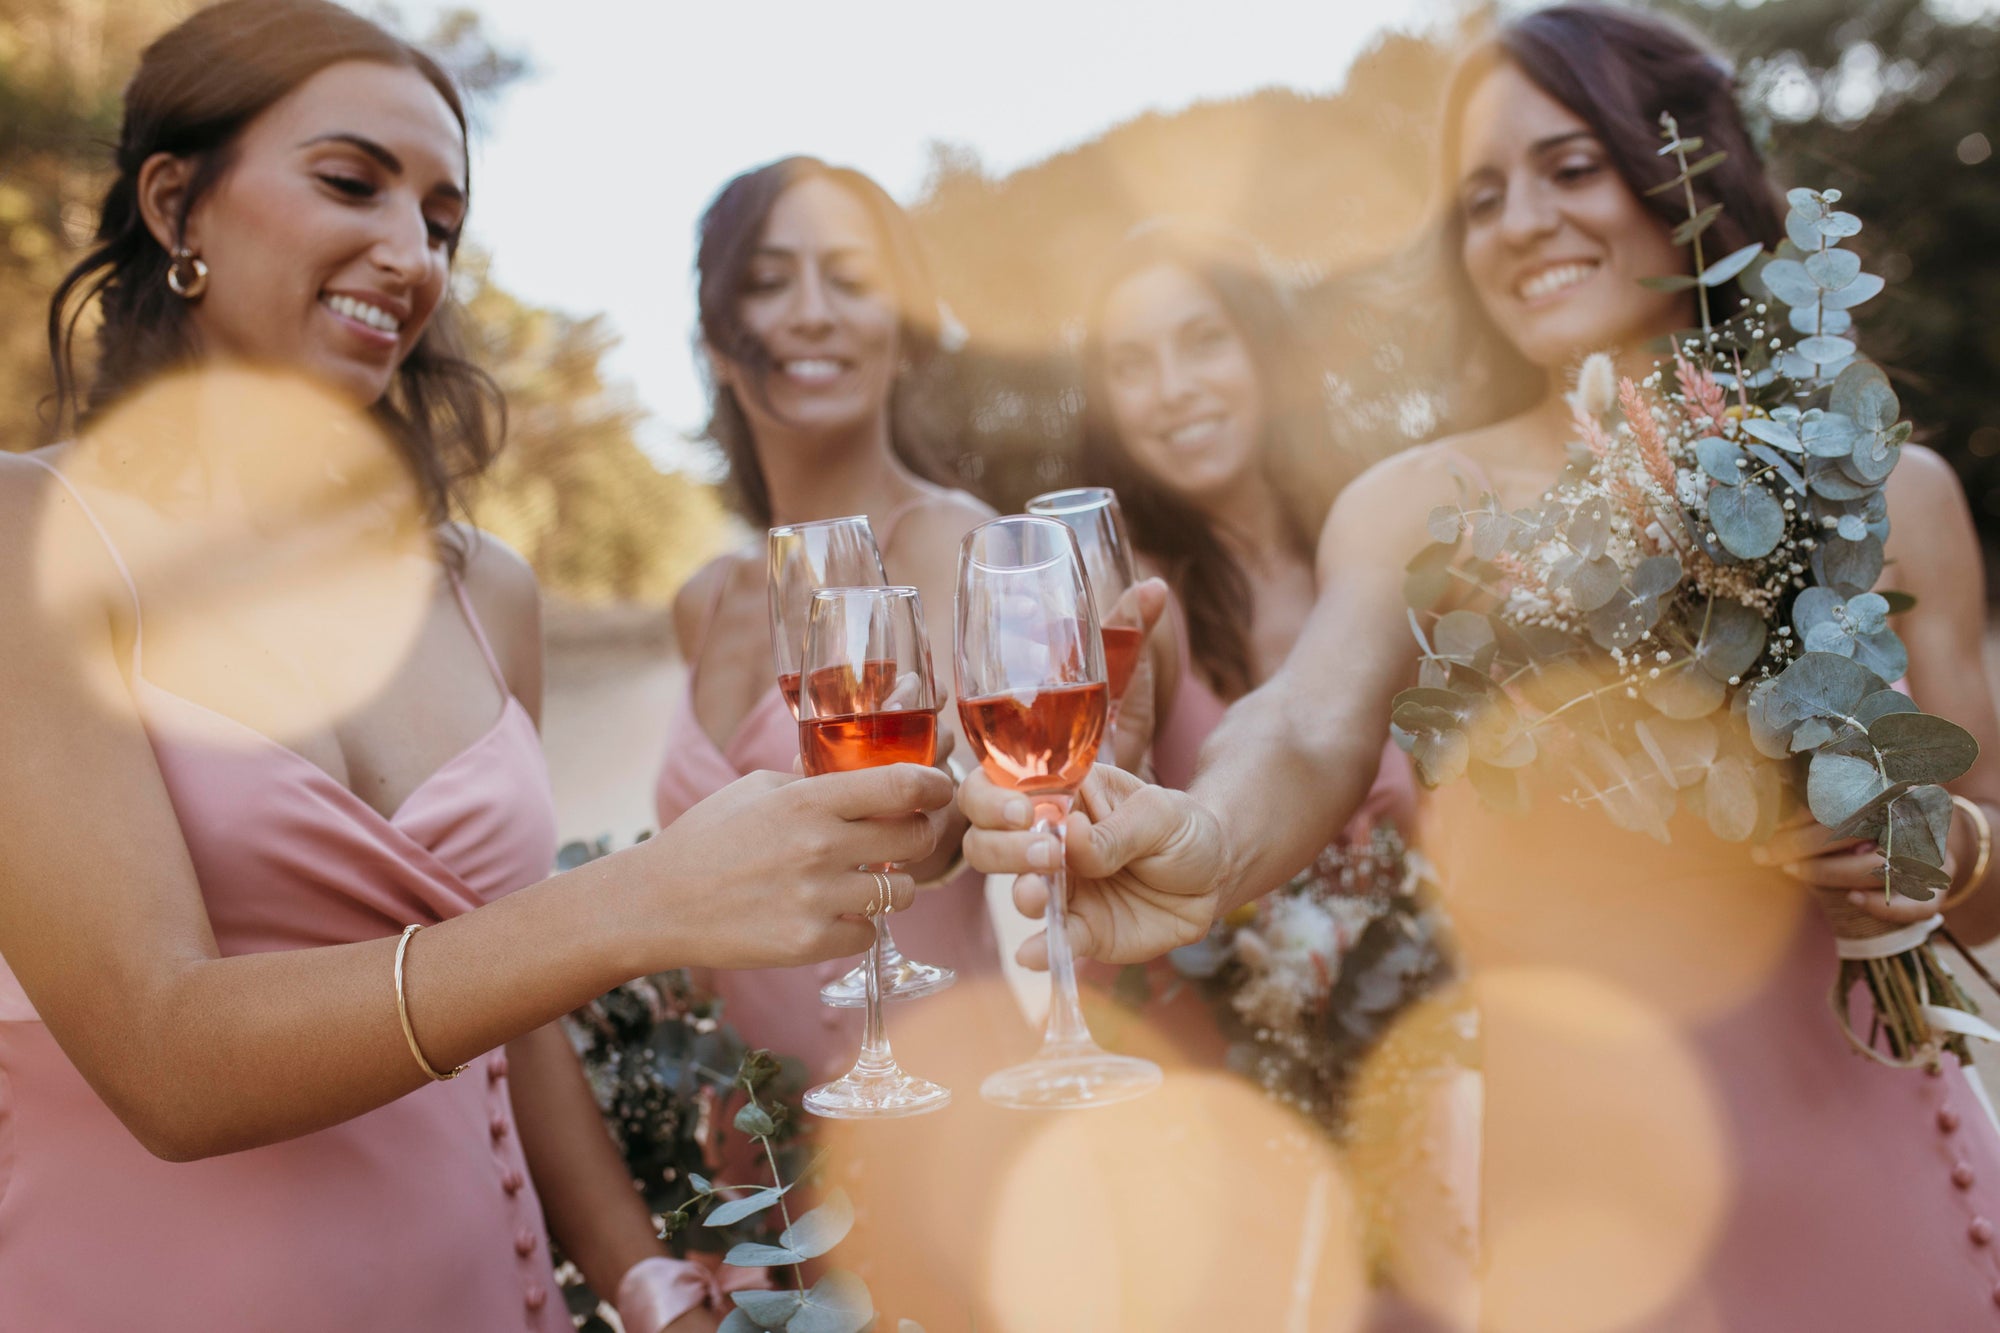 Cool Bride✨✨✨  Bachelorette partyplanung, Jga ideen frauen